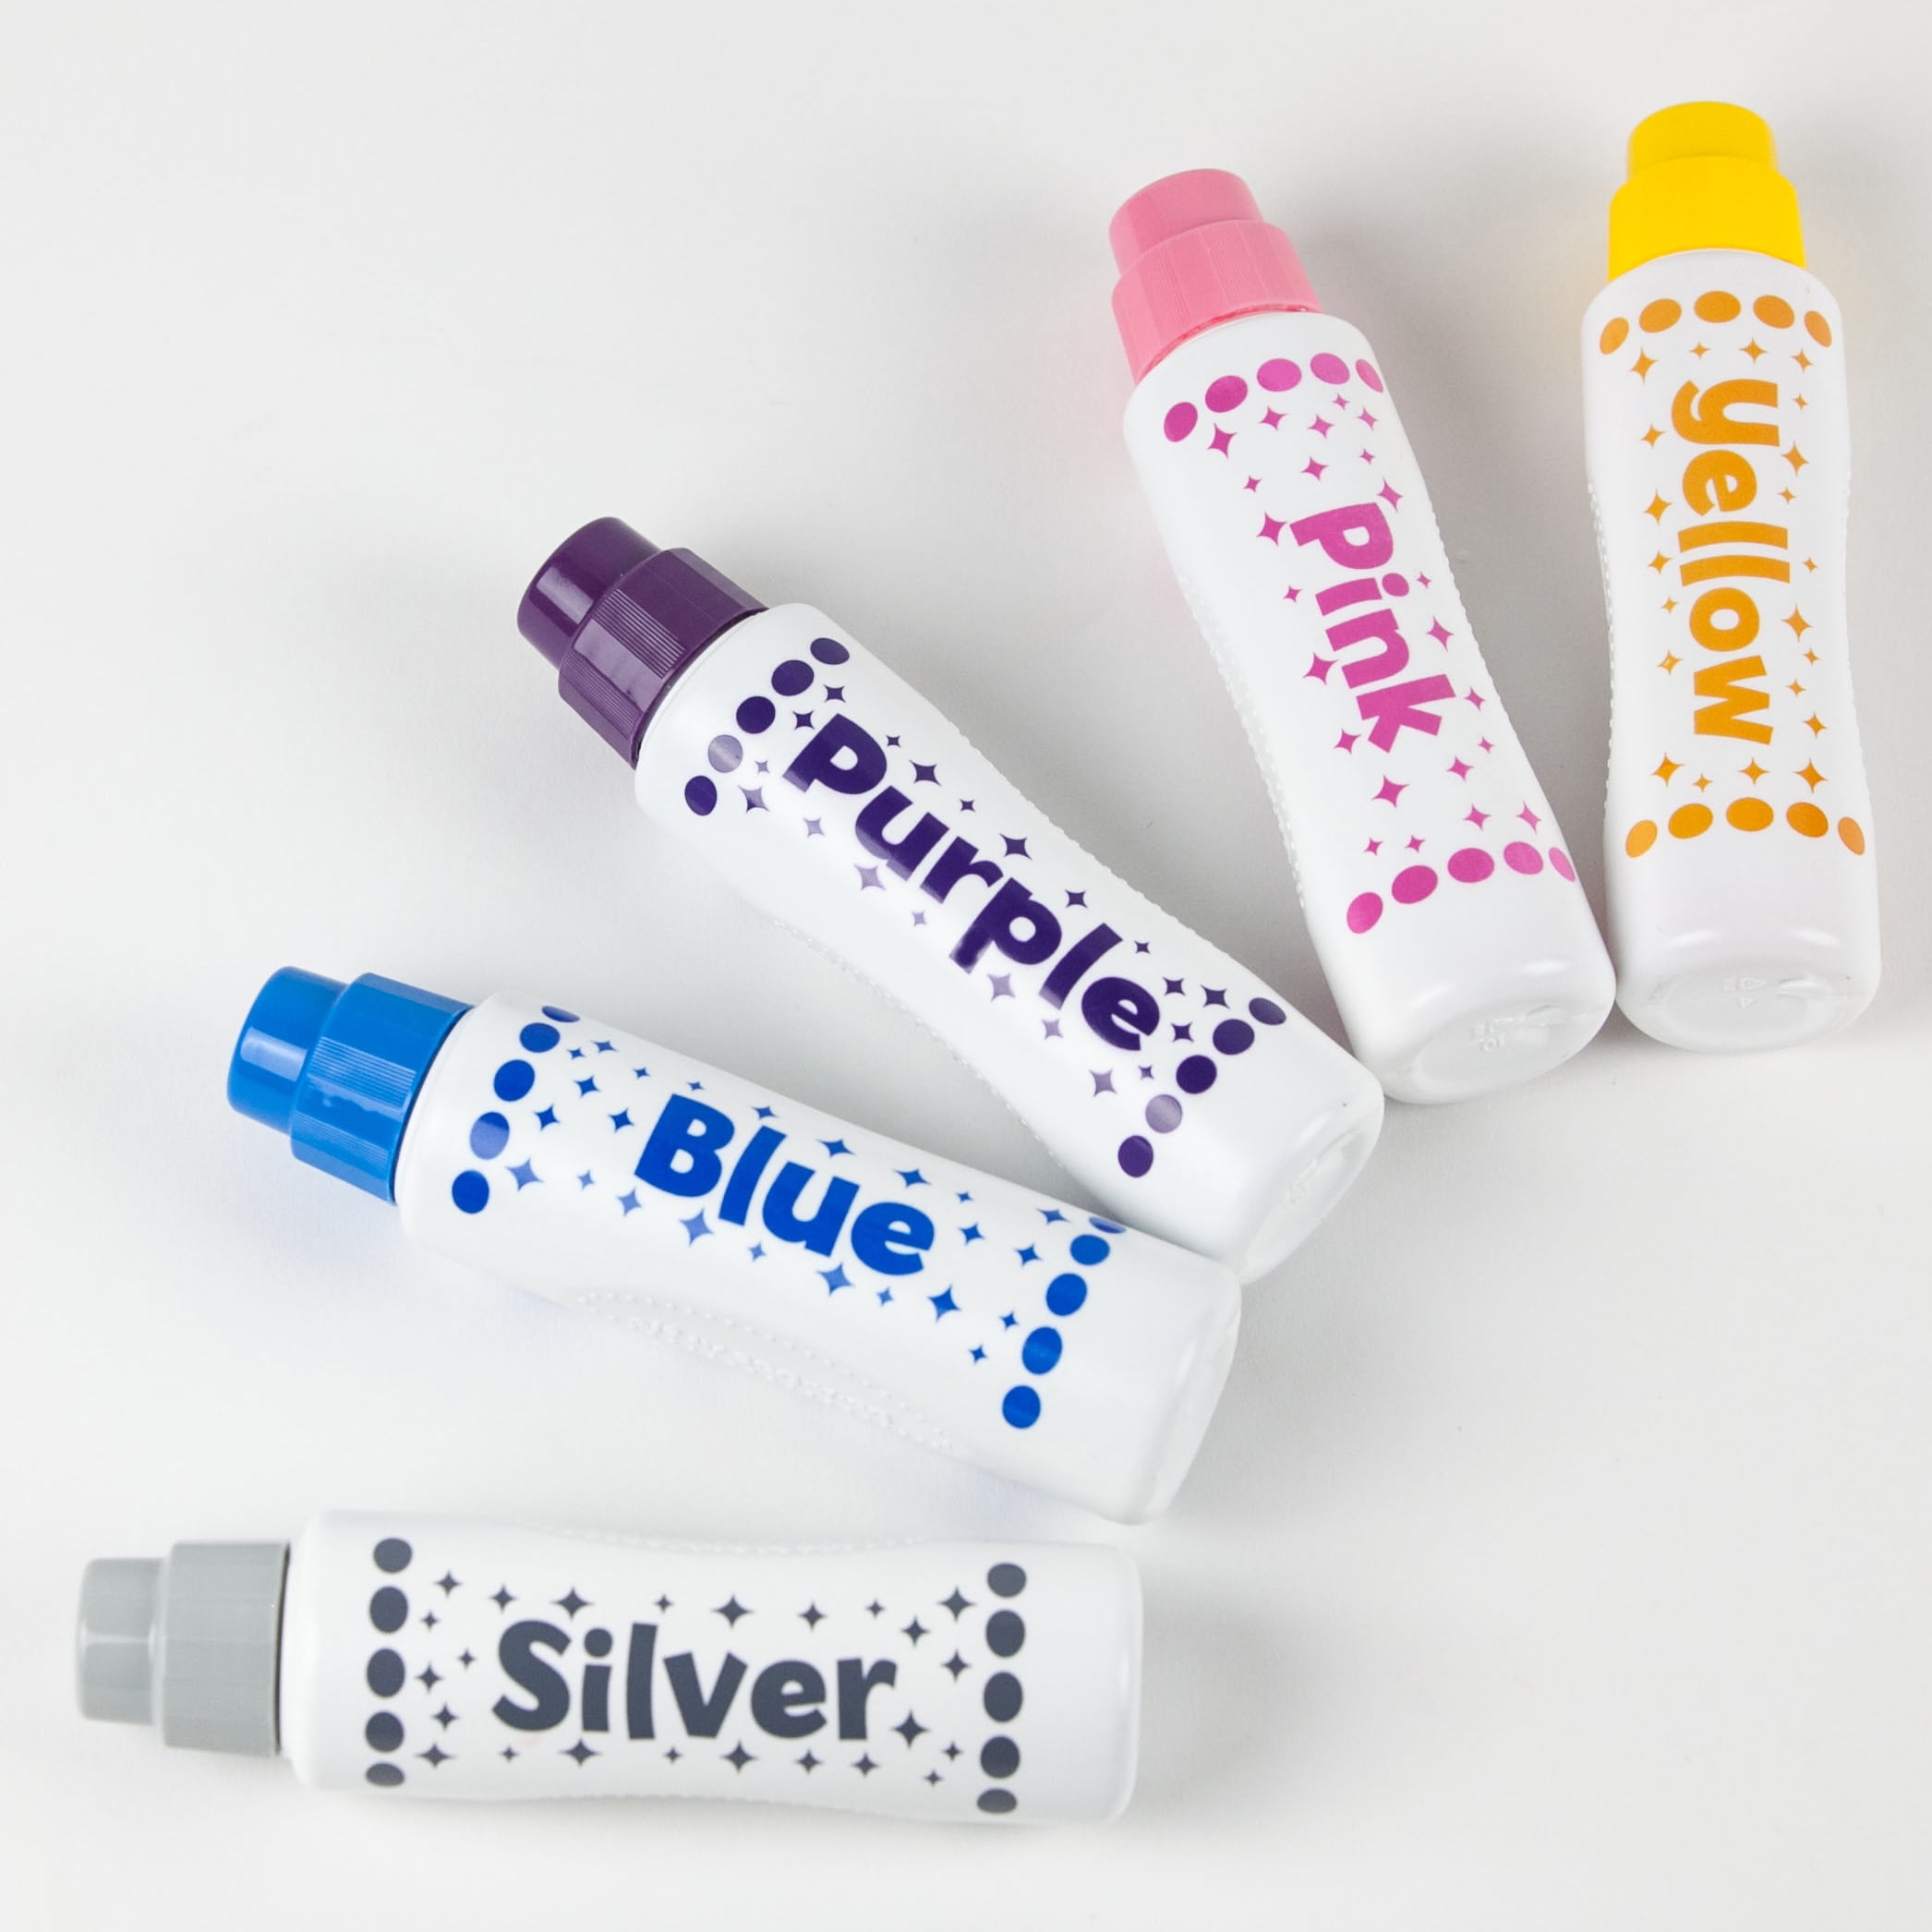 Do A Dot Art Metallic Shimmer Markers- 5 Colors - The Burlap Buffalo